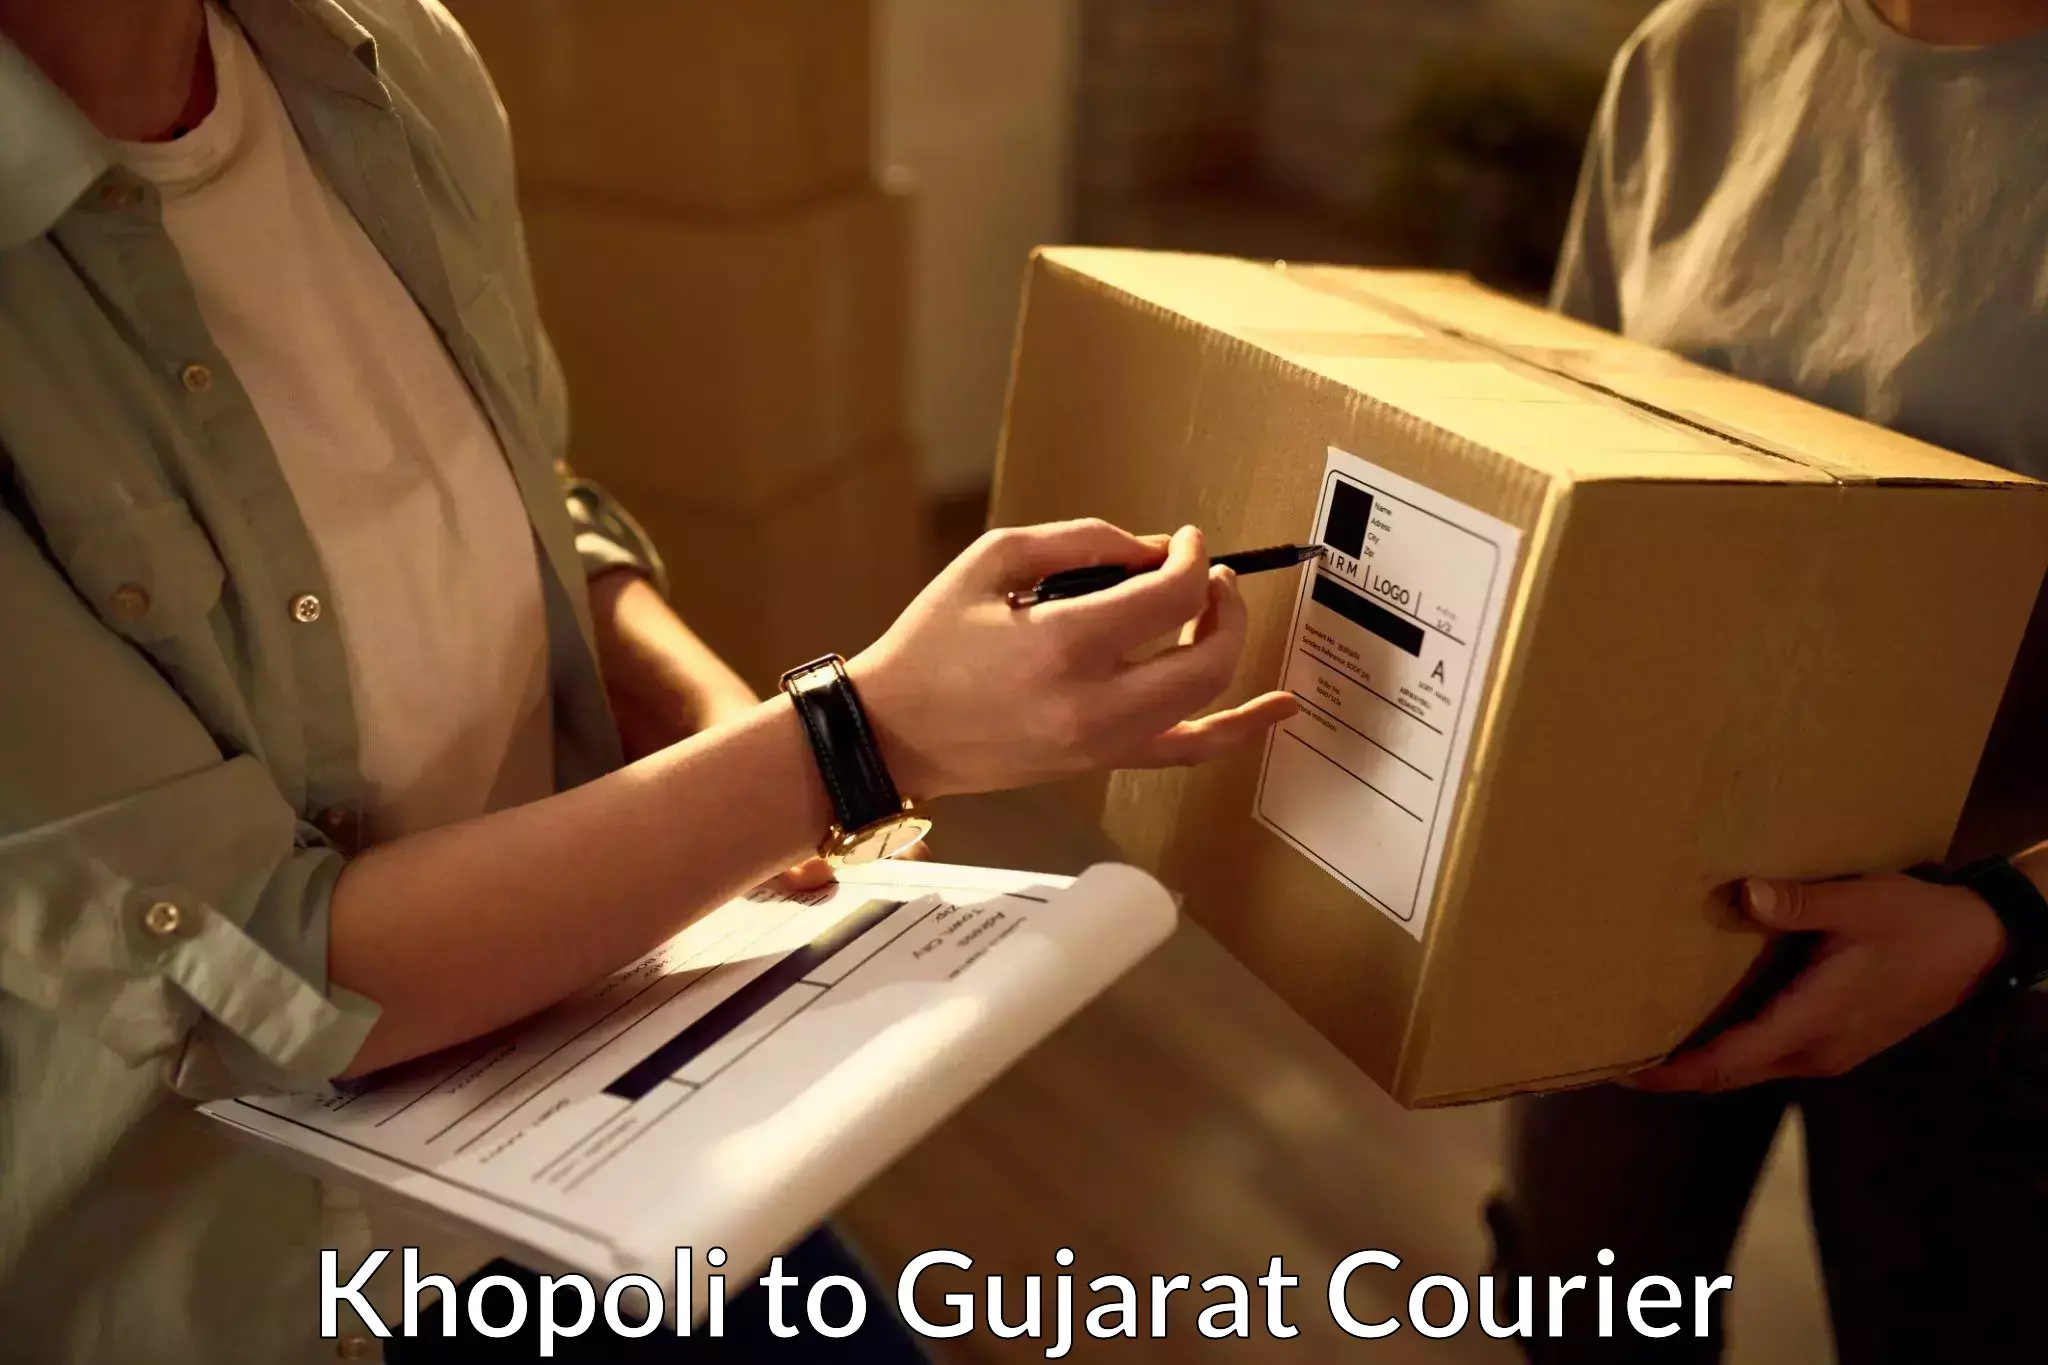 Global shipping networks Khopoli to Surat